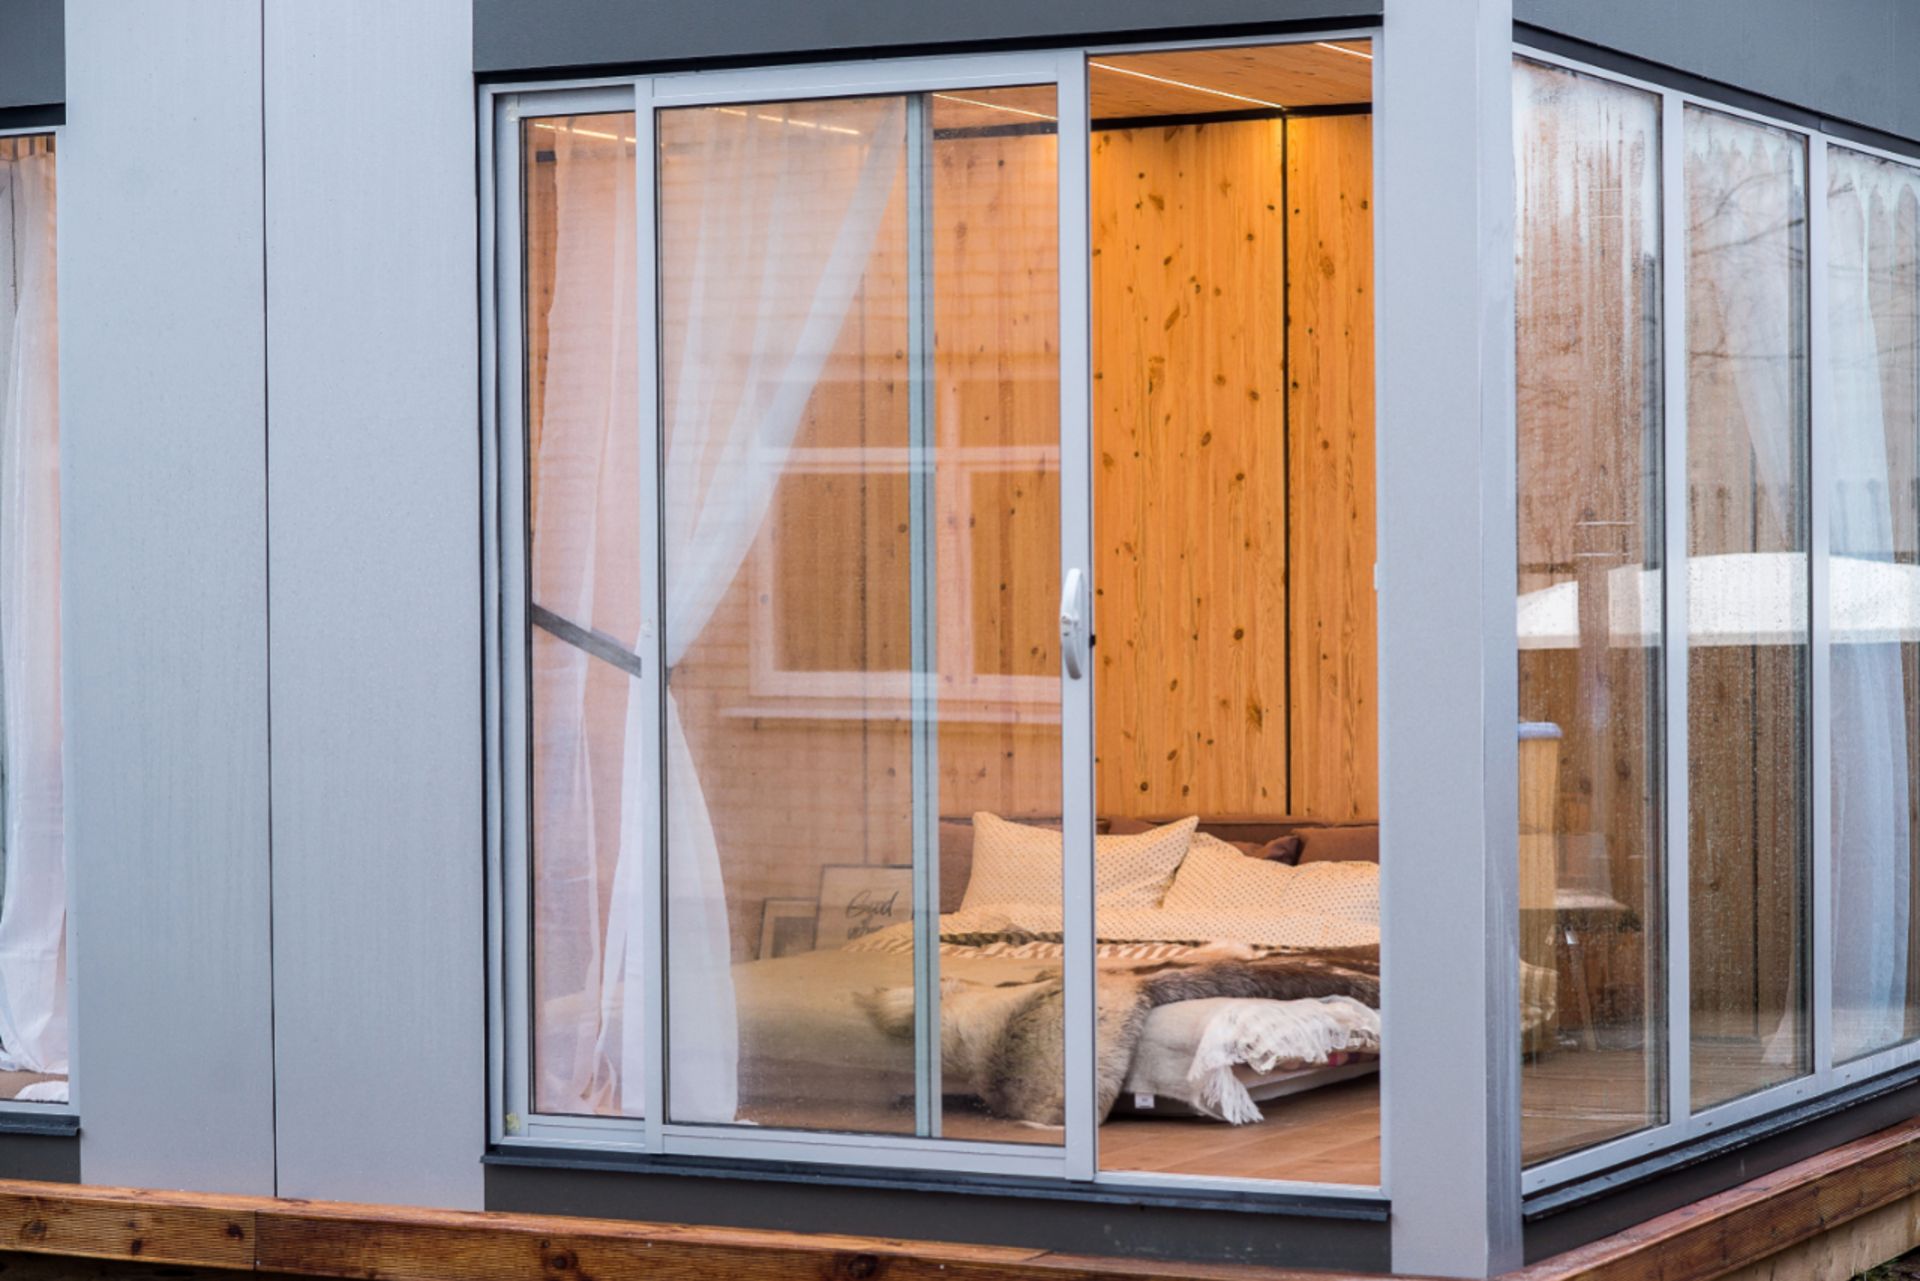 V Brand New Fantastic Modern 4m x 3m Garden Cube Perfect For Office/Living Accomodation/Summer House - Image 6 of 6